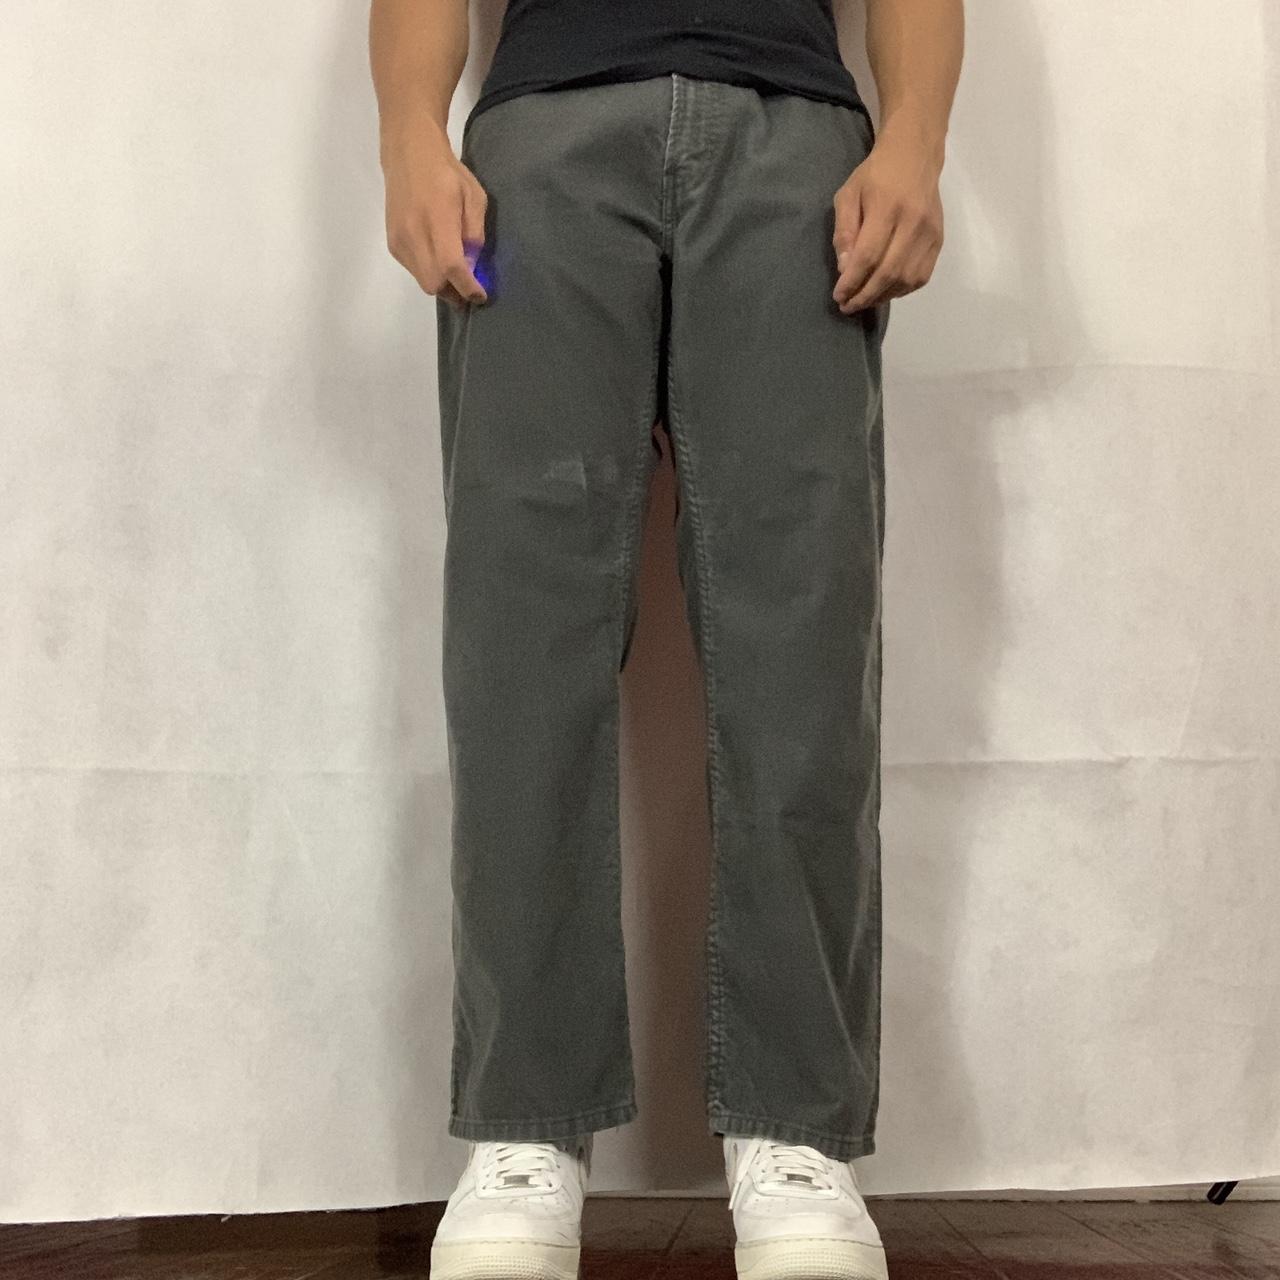 Grey Levi’s 559 corduroy pants Model is 6’1 for... - Depop